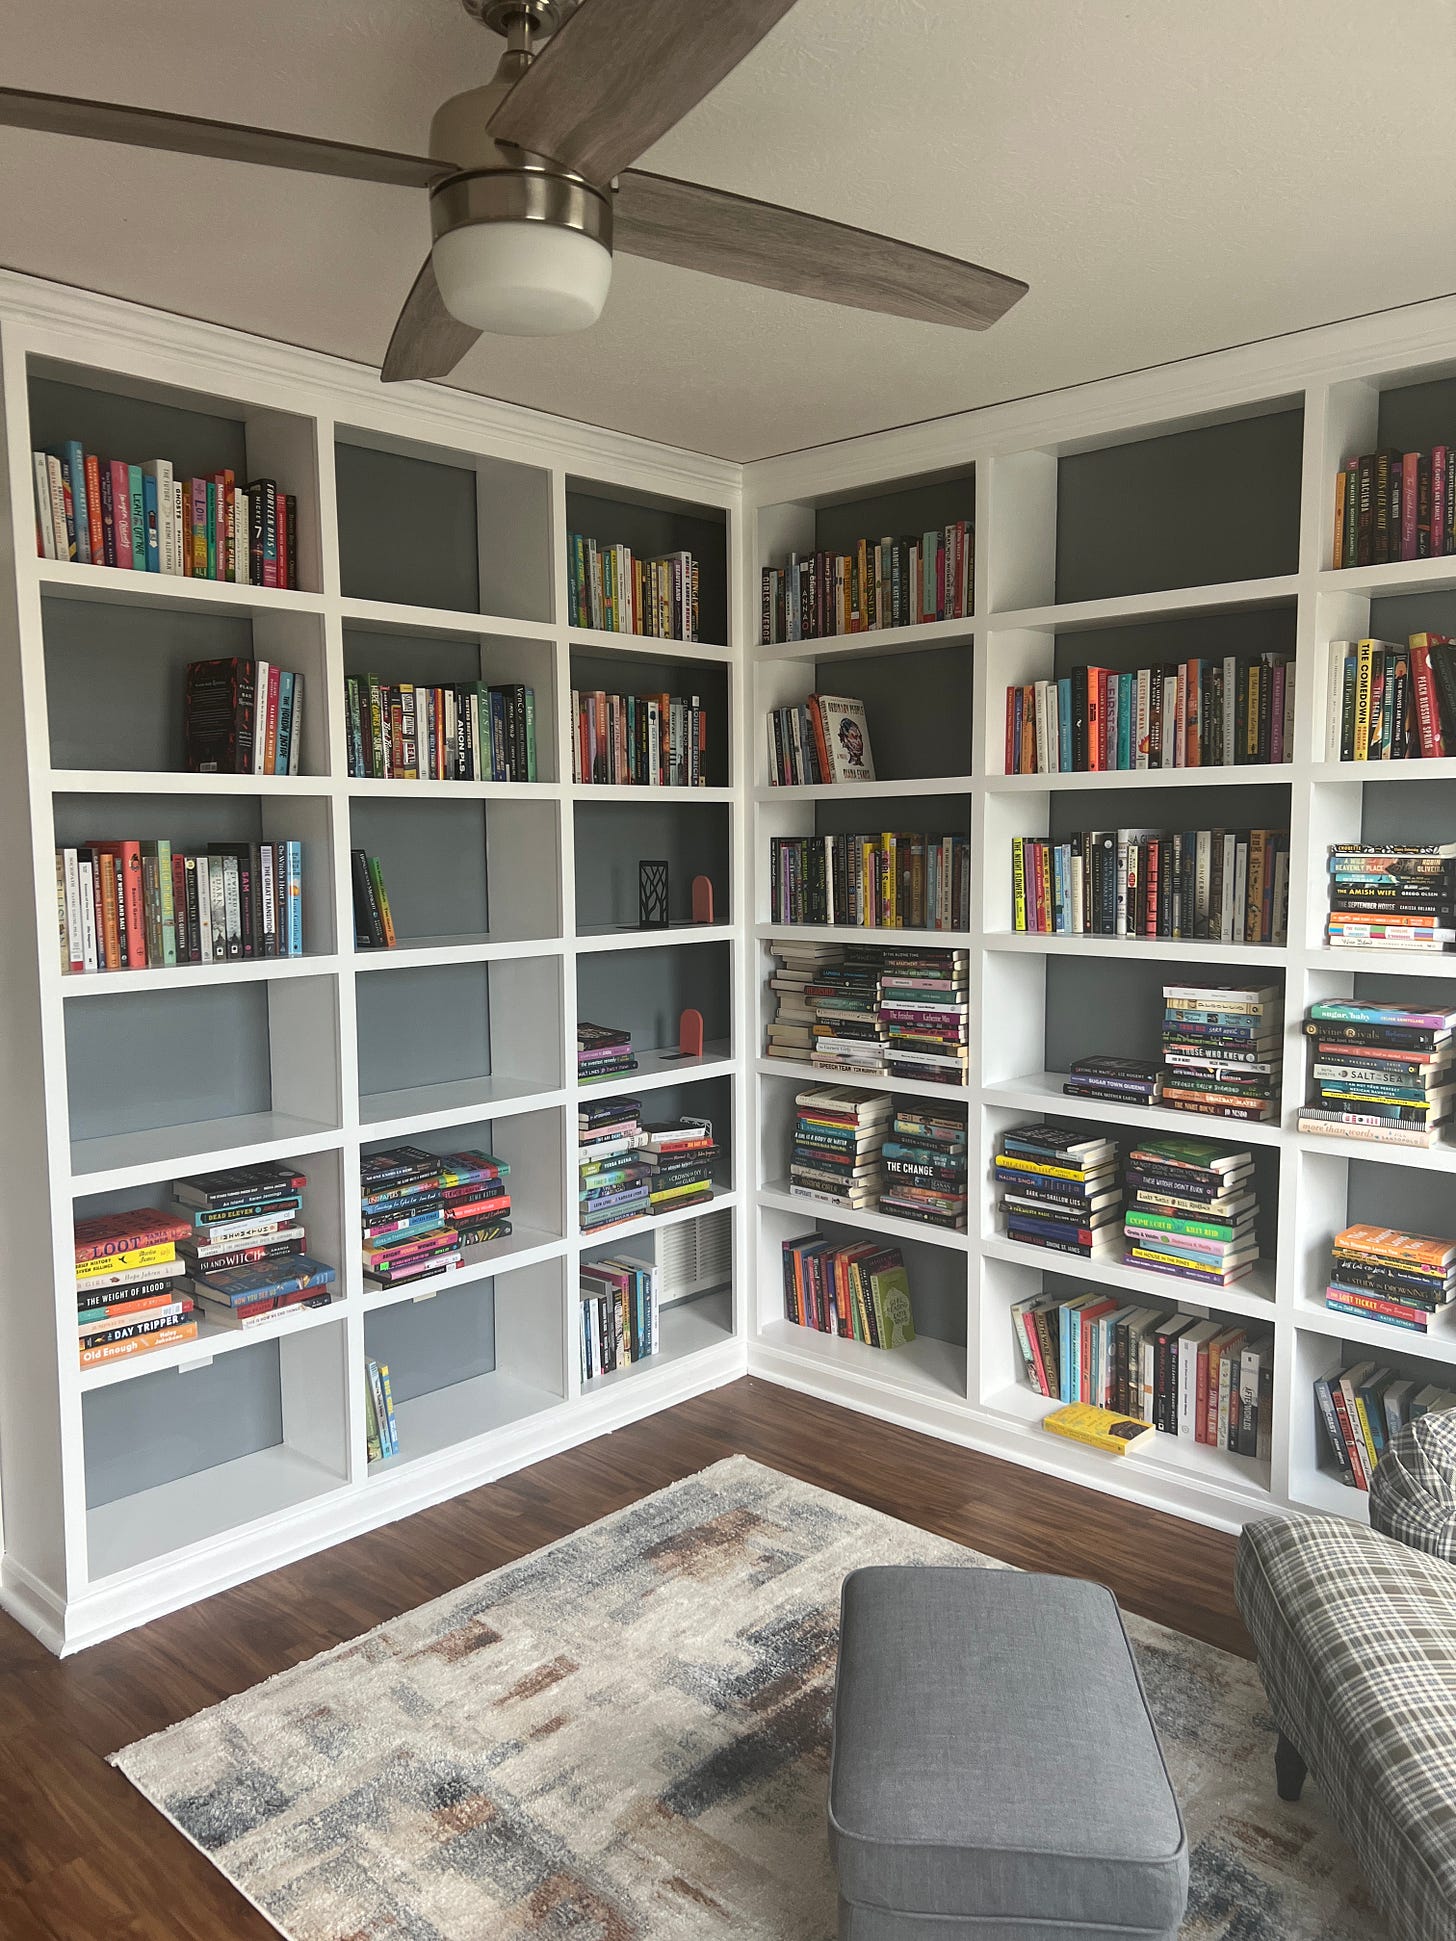 White built-in bookshelves with hundreds of books stacked haphazardly.